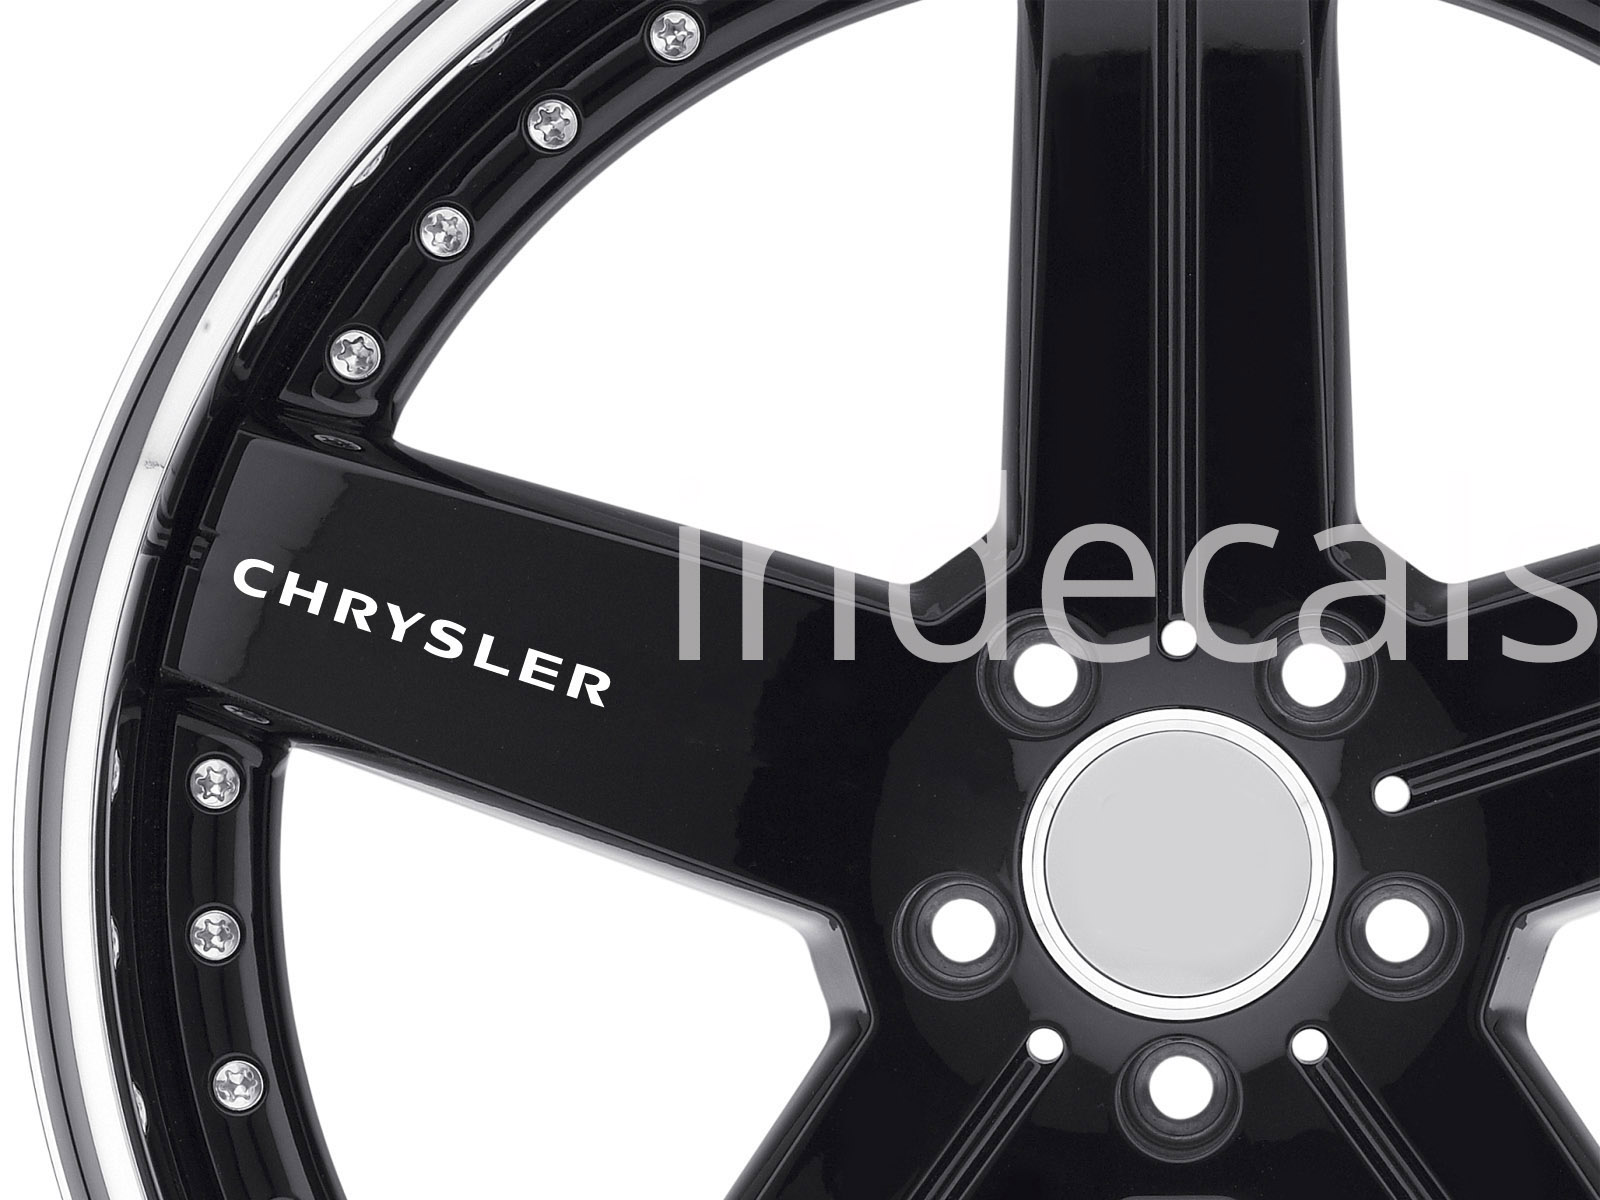 6 x Chrysler Stickers for Wheels - White